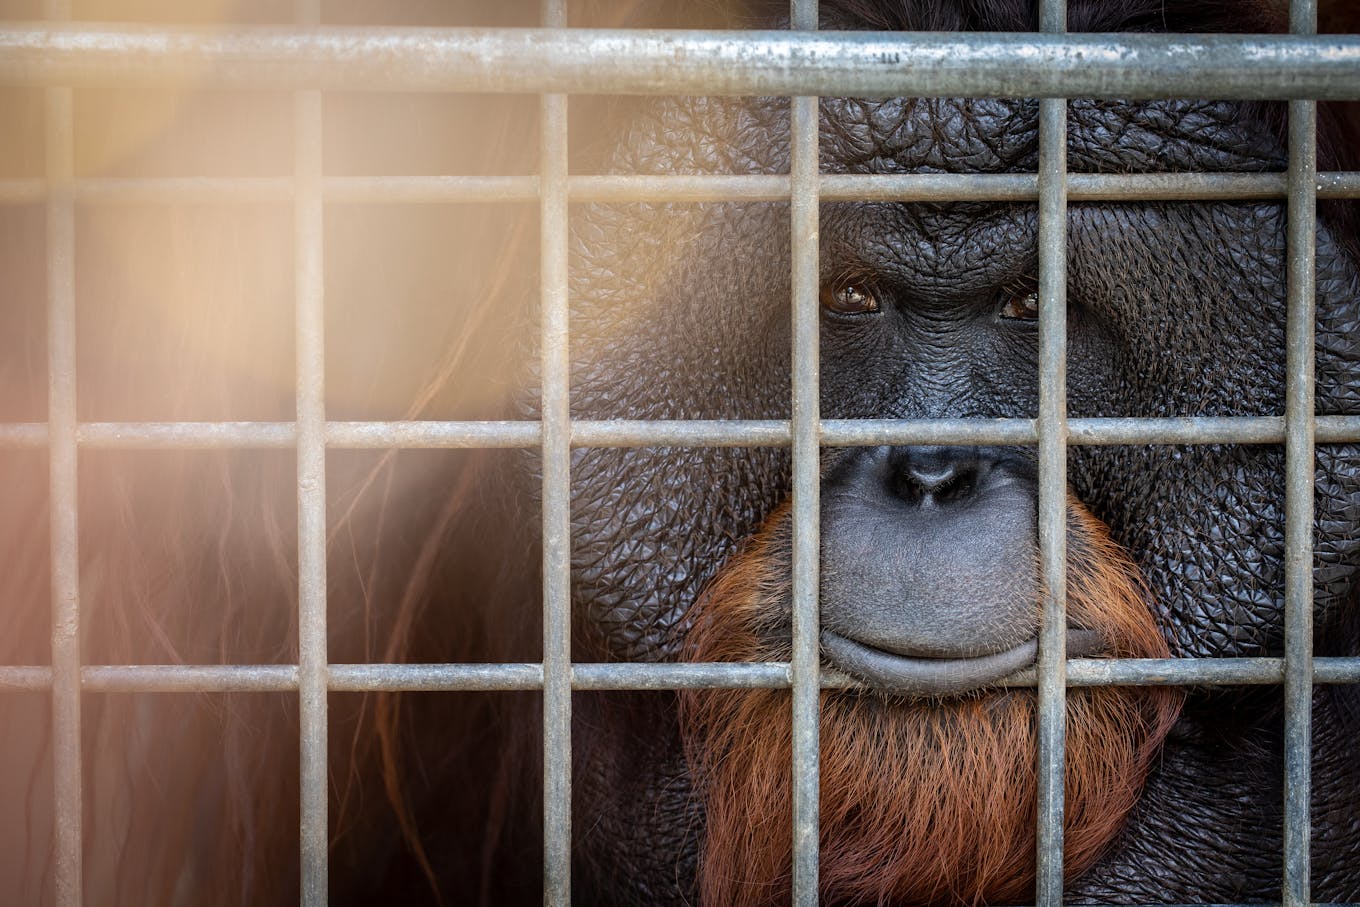 An unreleasable orangutan at the Borneo Orangutan Survival Foundation in Central Kalimantan, Indonesia